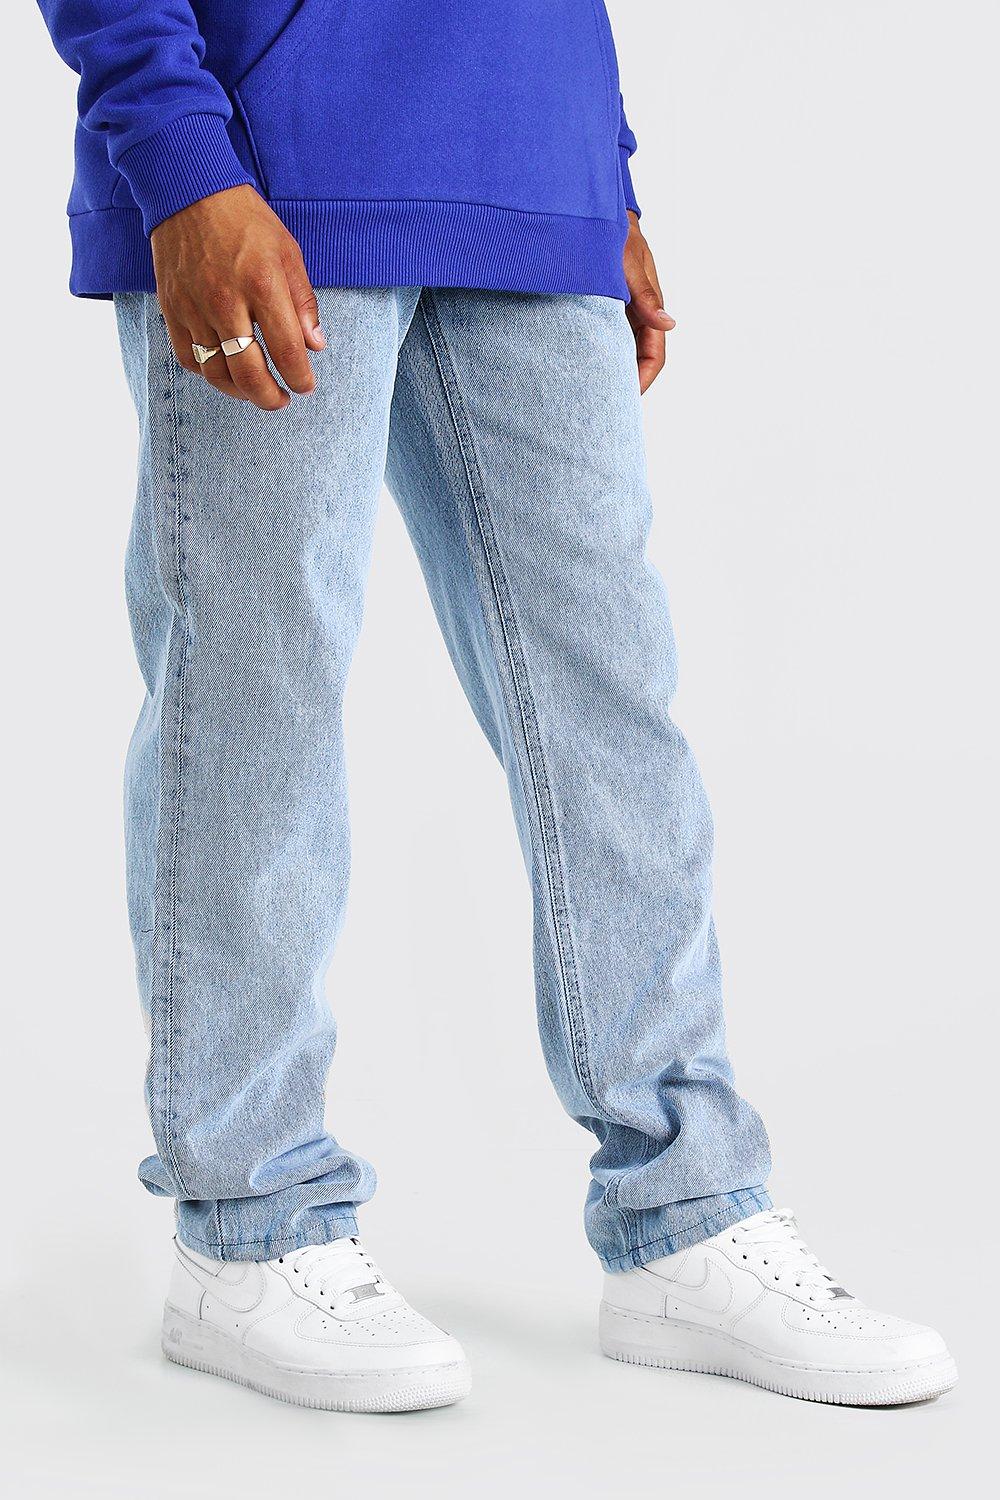 boohooman jeans sale